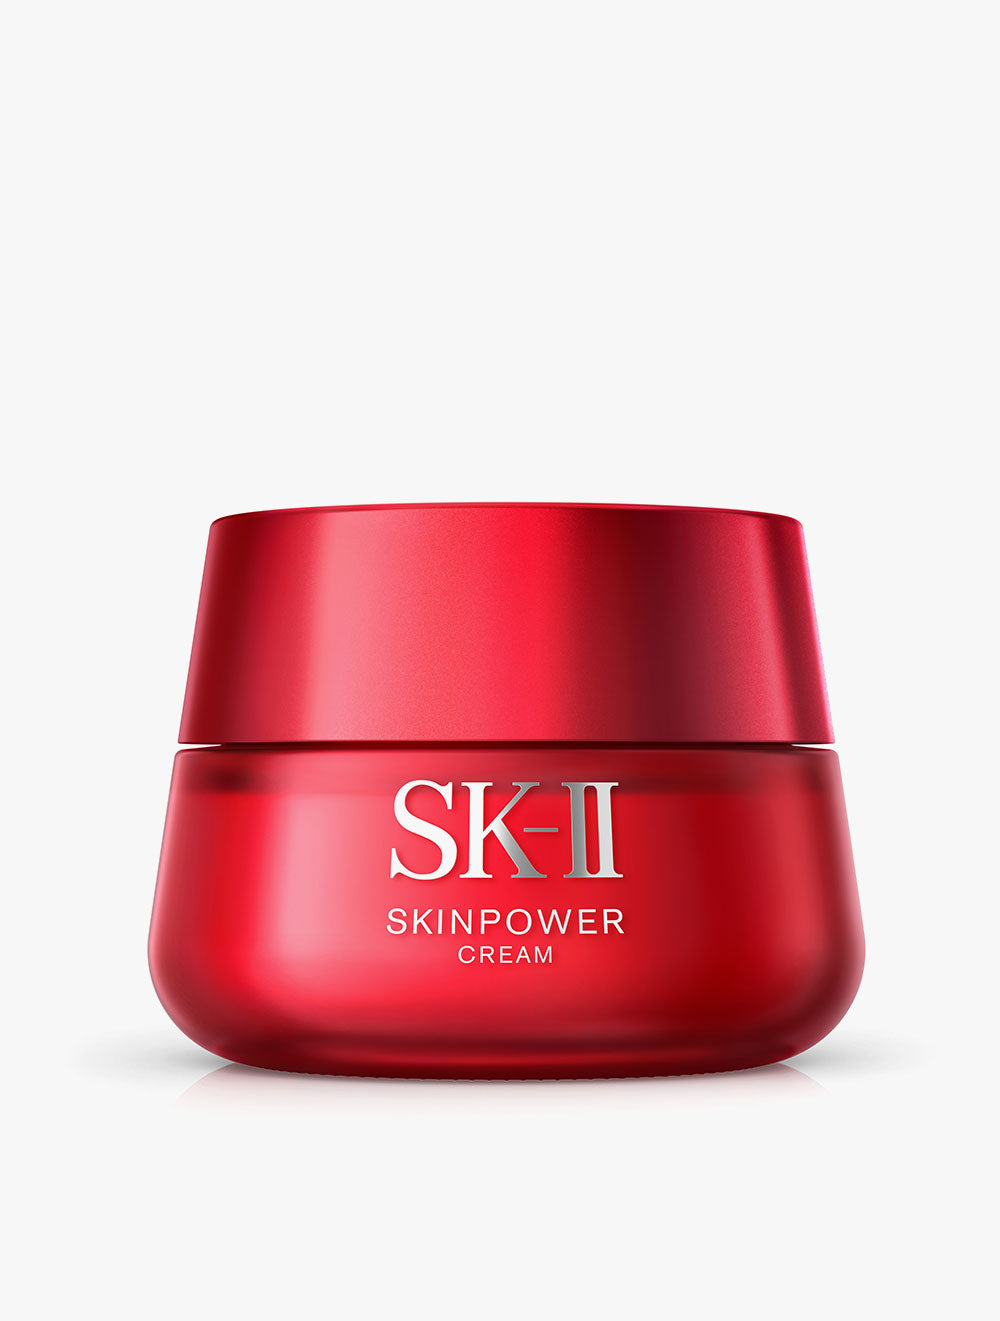 SK-II SKINPOWER Cream 80g